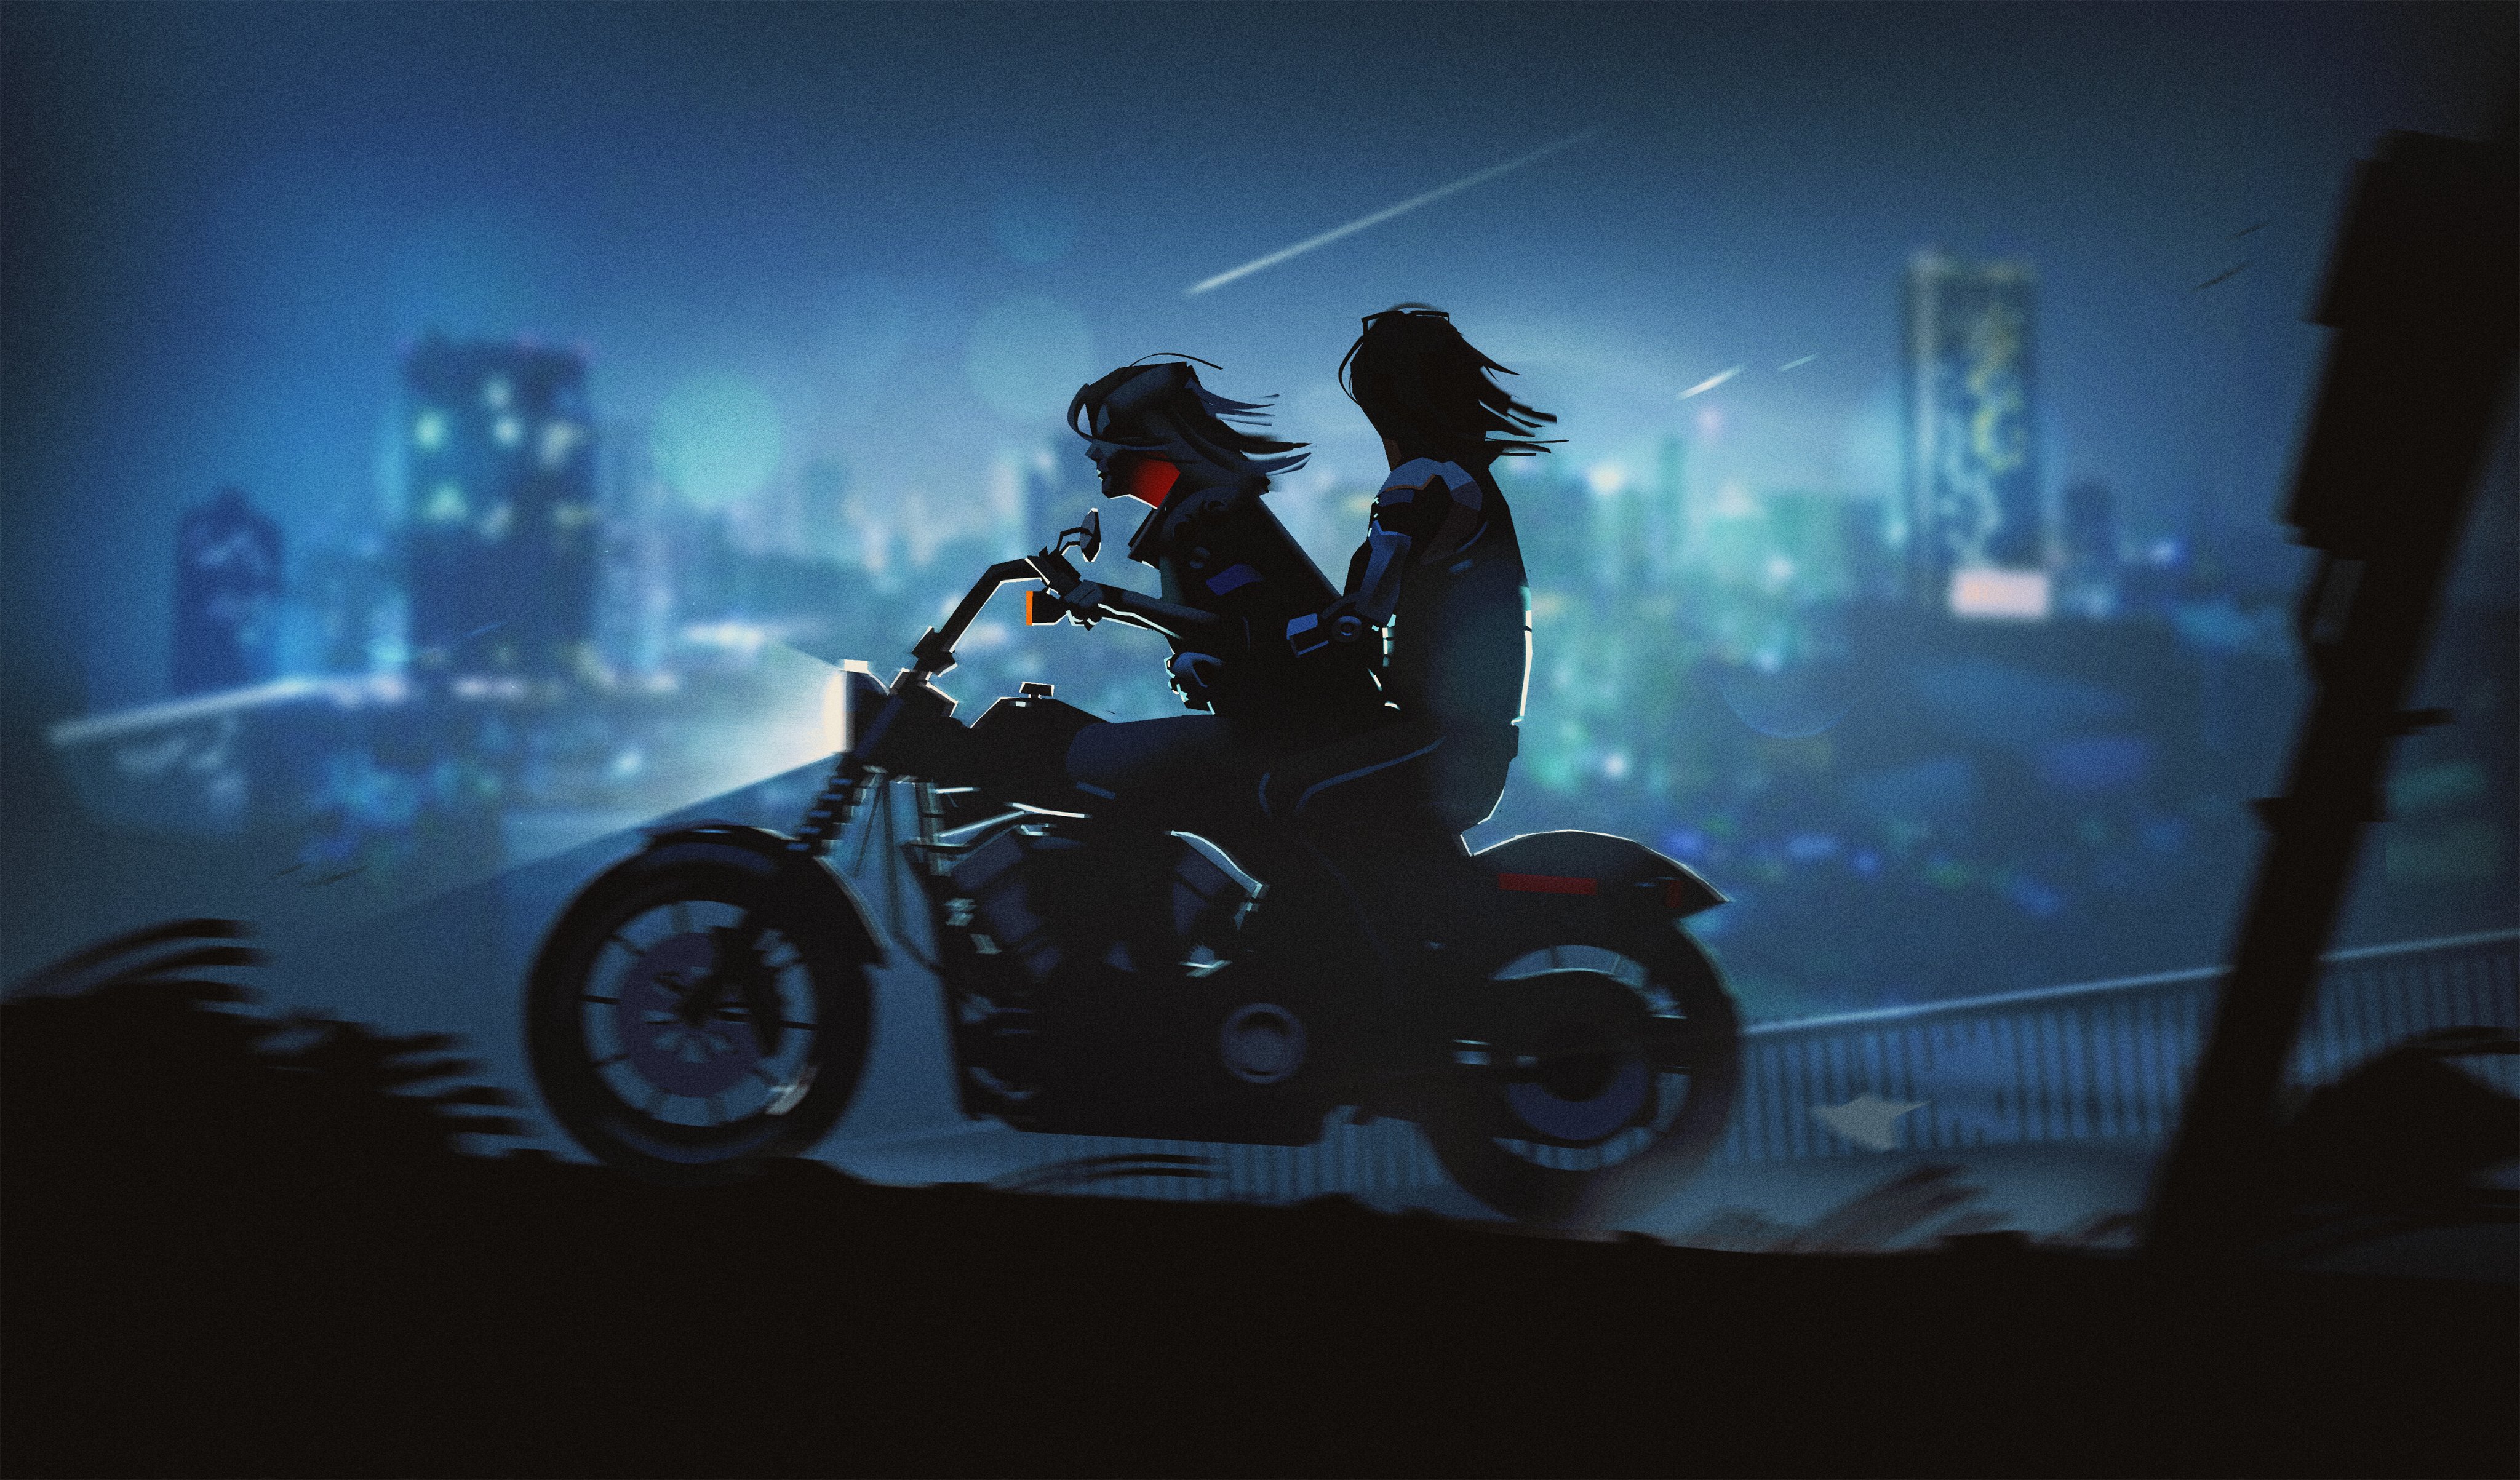 Poisonpink Digital Art Artwork Illustration Digital Painting Night Nightscape Couple Motorcycle City 4096x2406